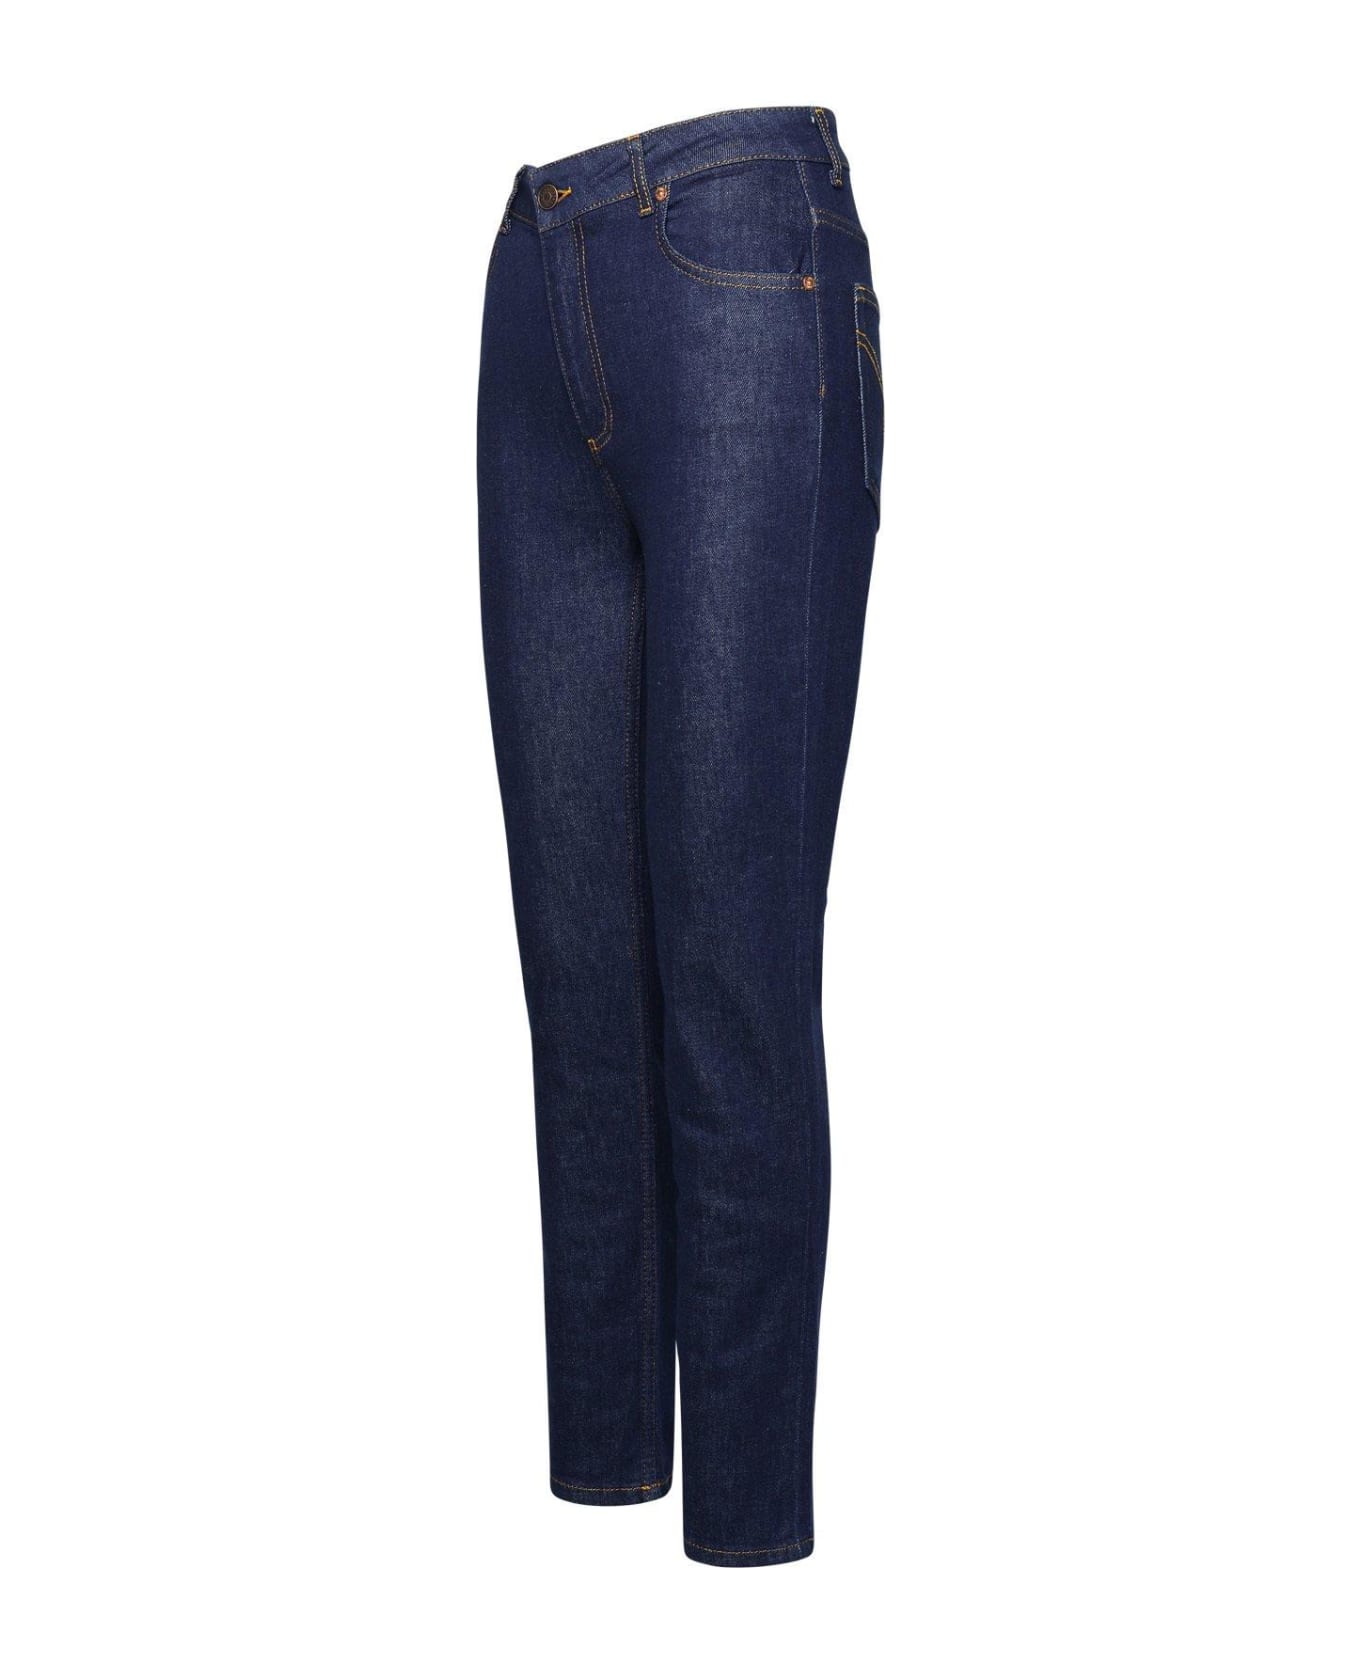 M05CH1N0 Jeans High Waist Slim Fit Jeans - Denim